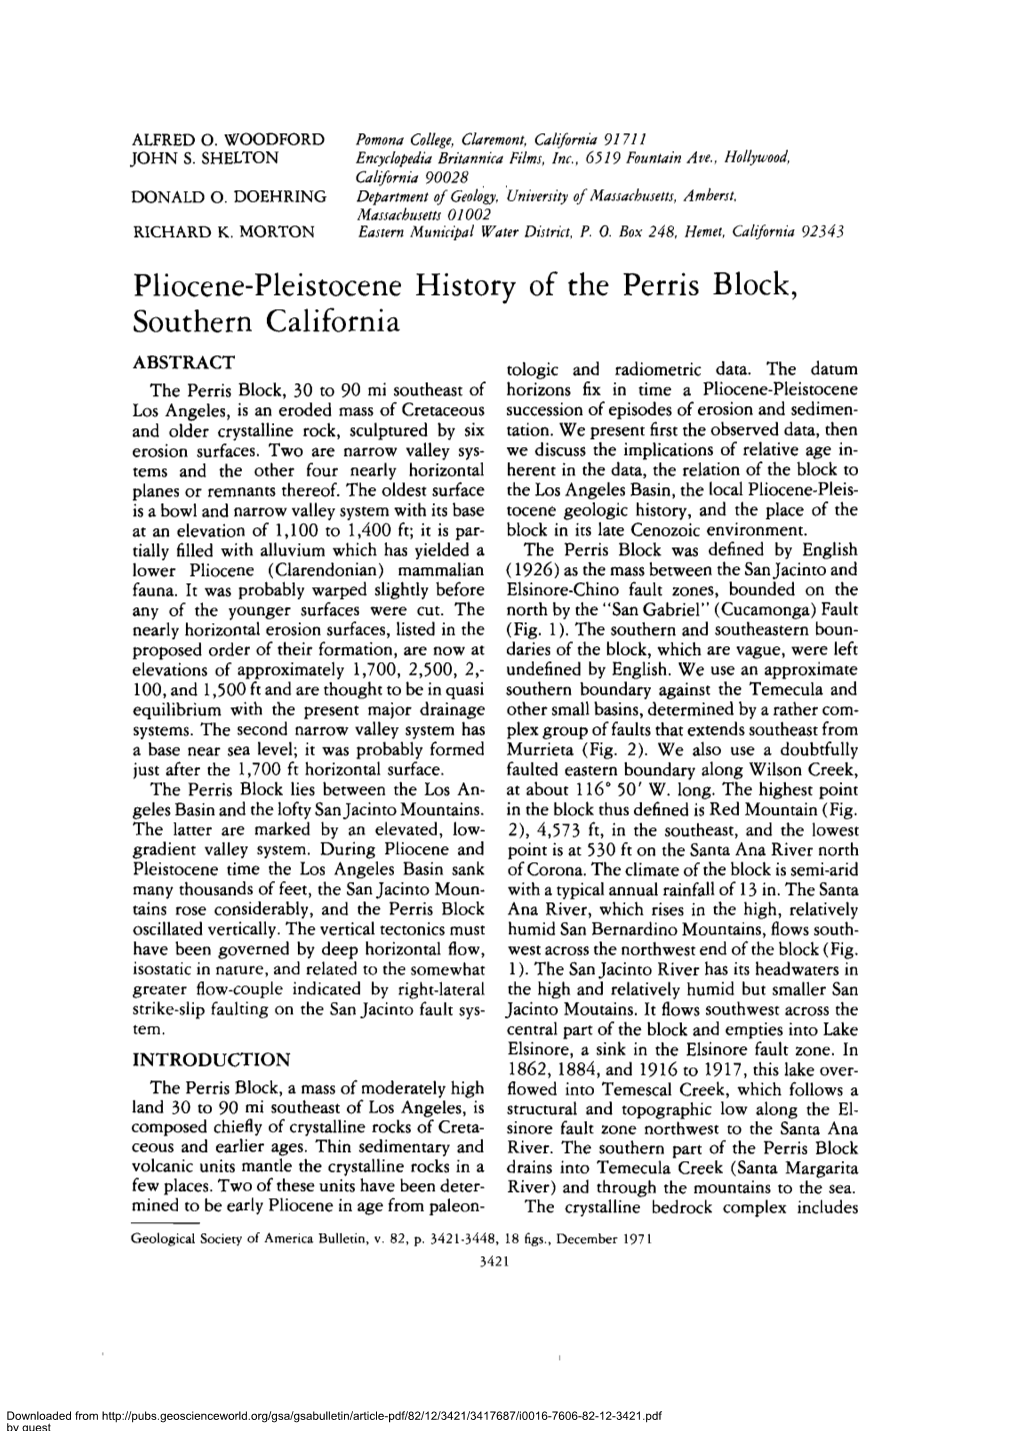 Pliocene-Pleistocene History of the Perris Block, Southern California